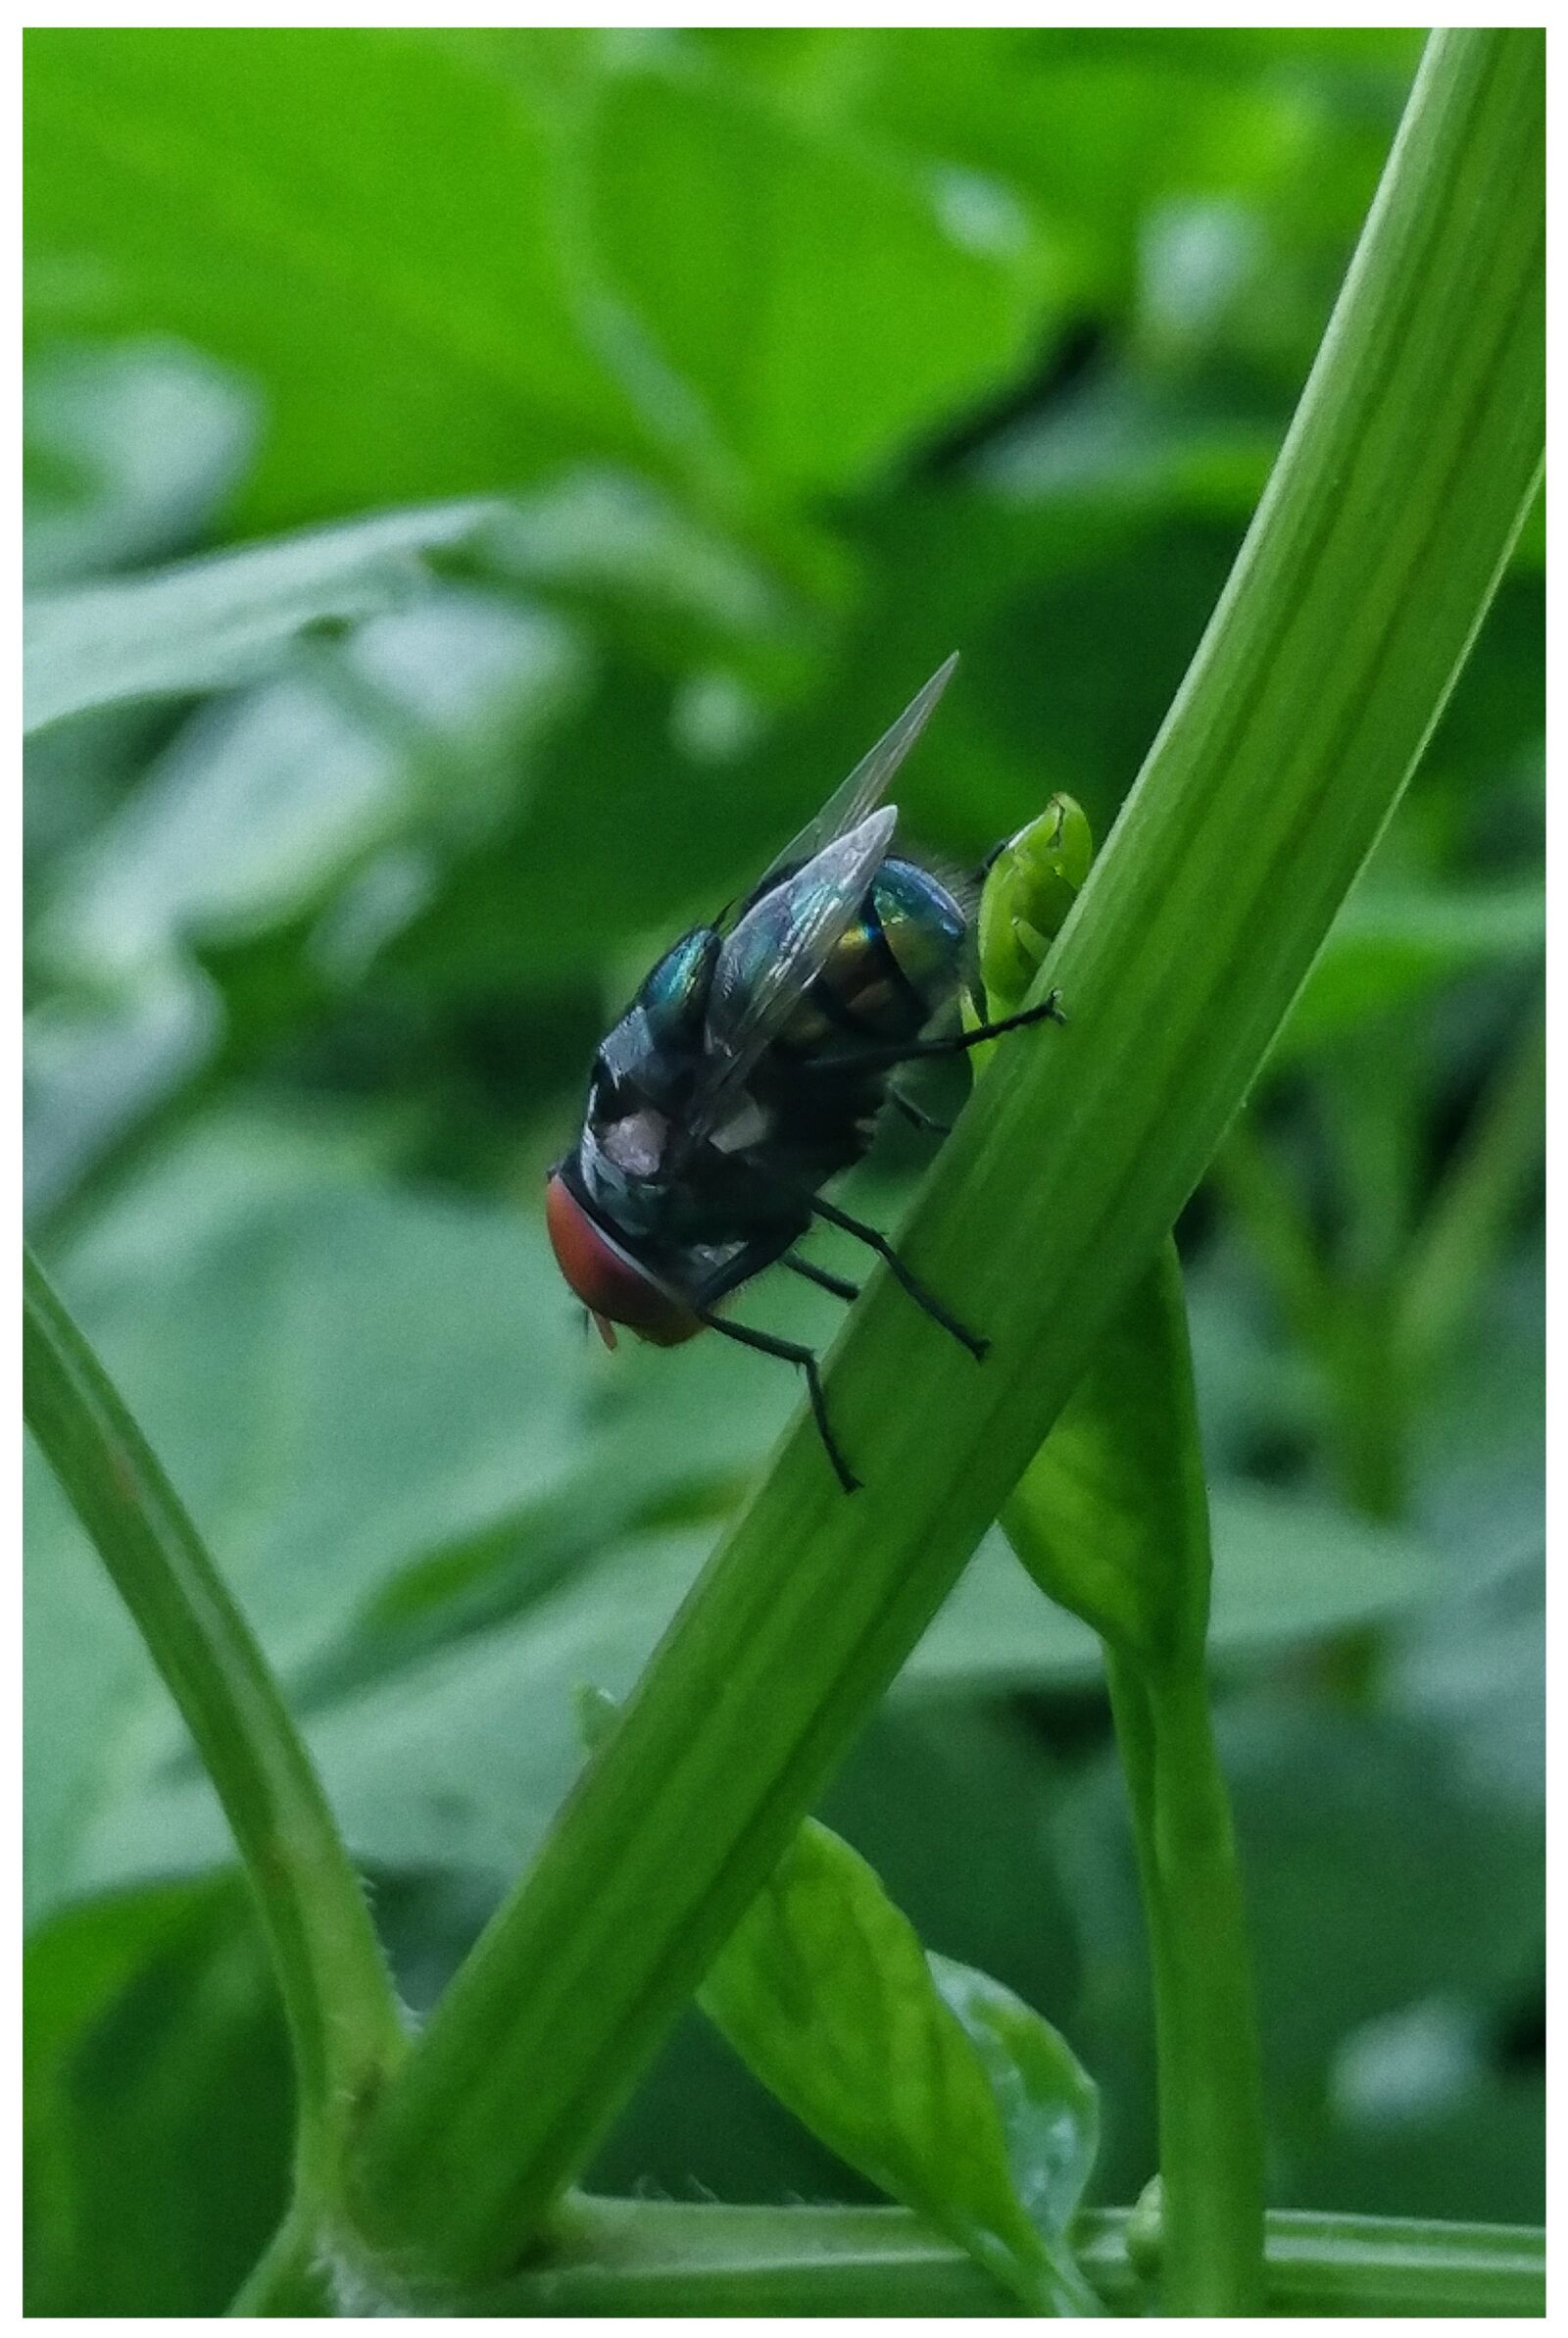 LG V20 sample photo. Insect, pest, bug photography